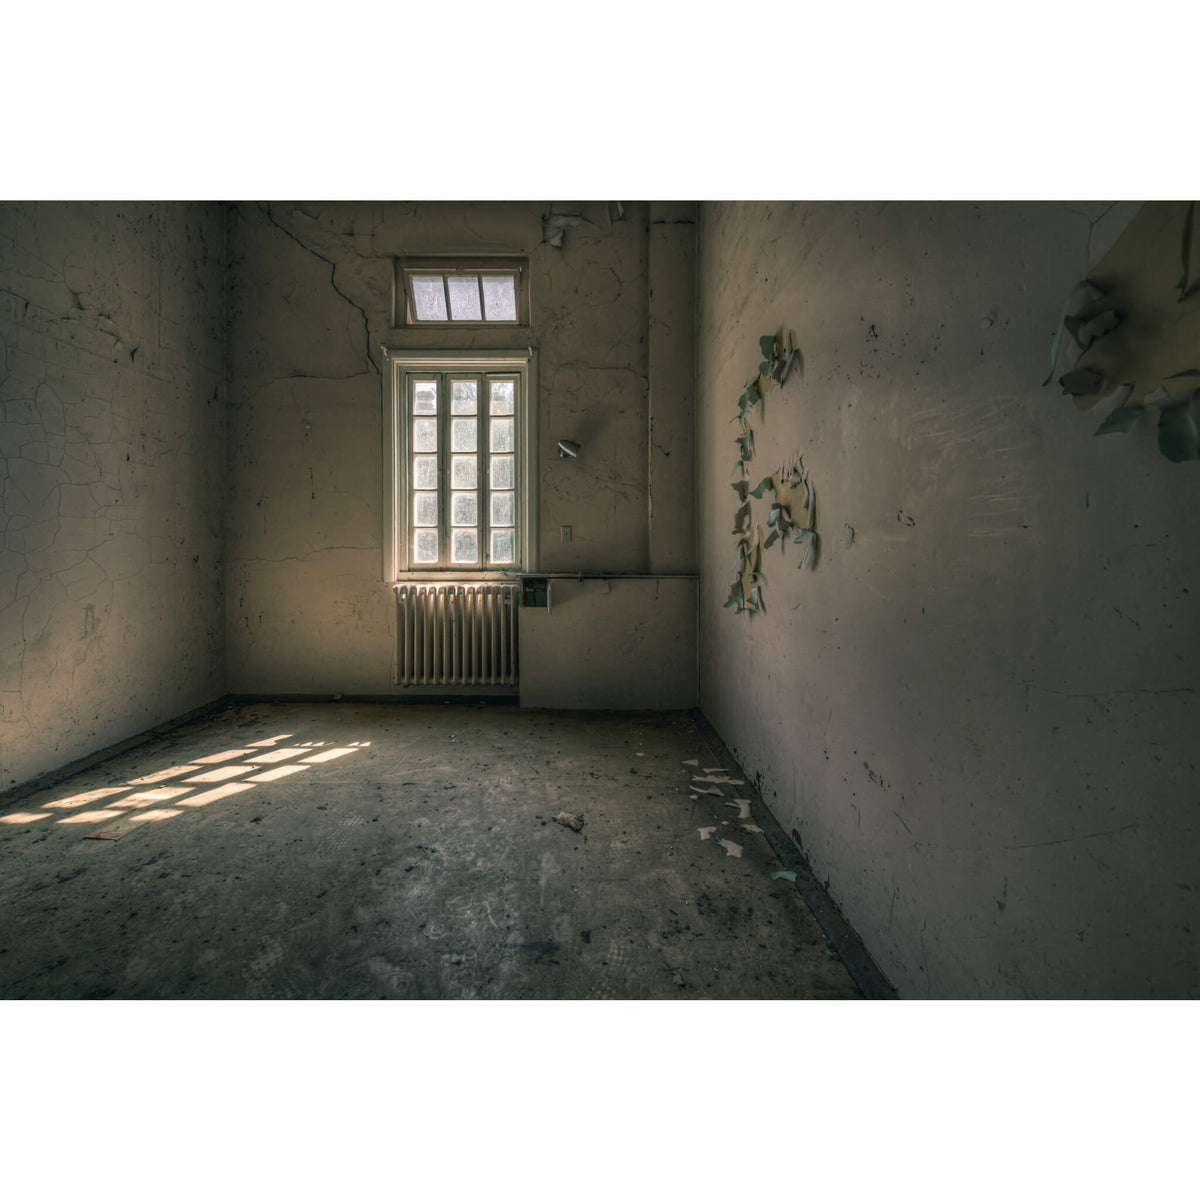 Confinement | The Asylum